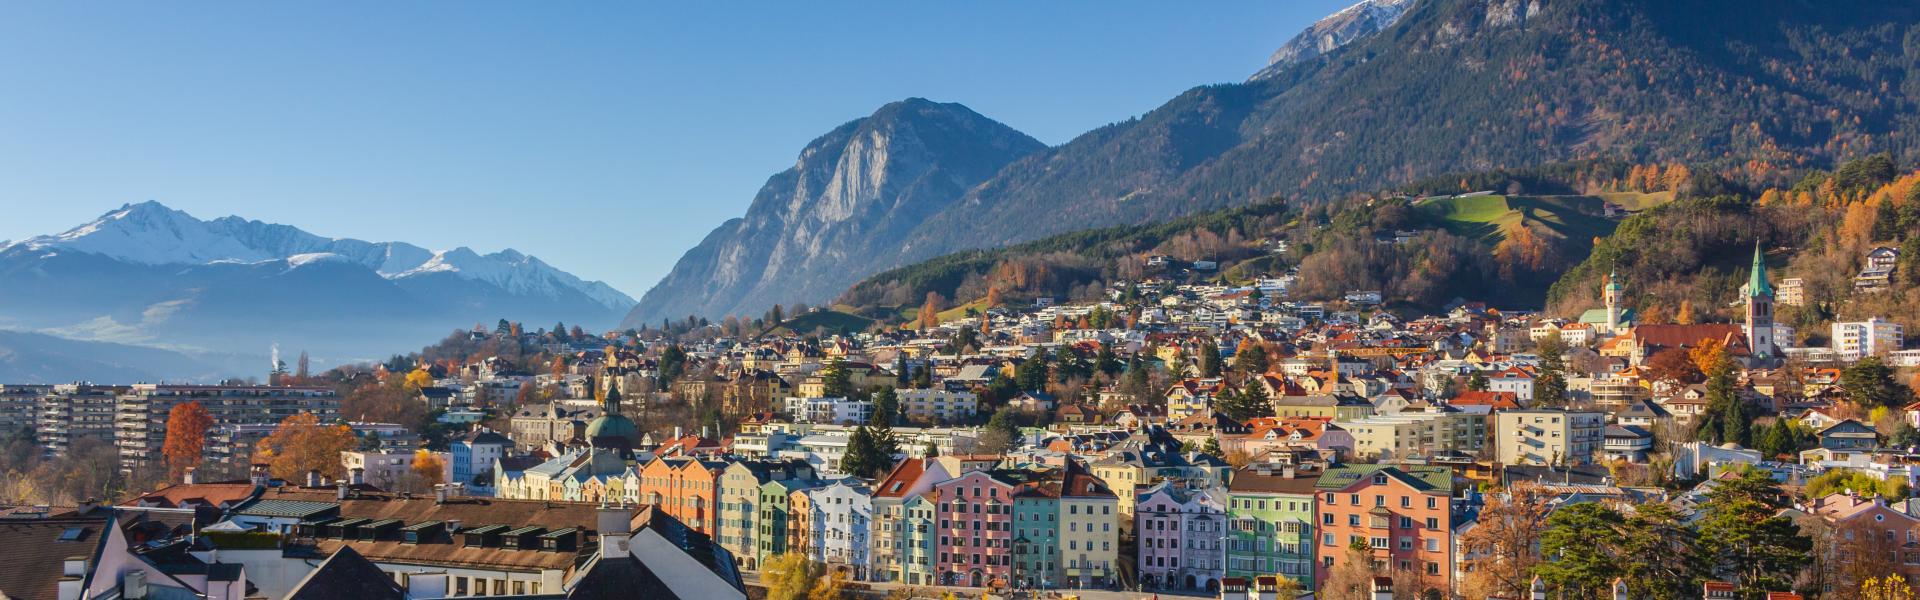 Innsbruck Scenic View